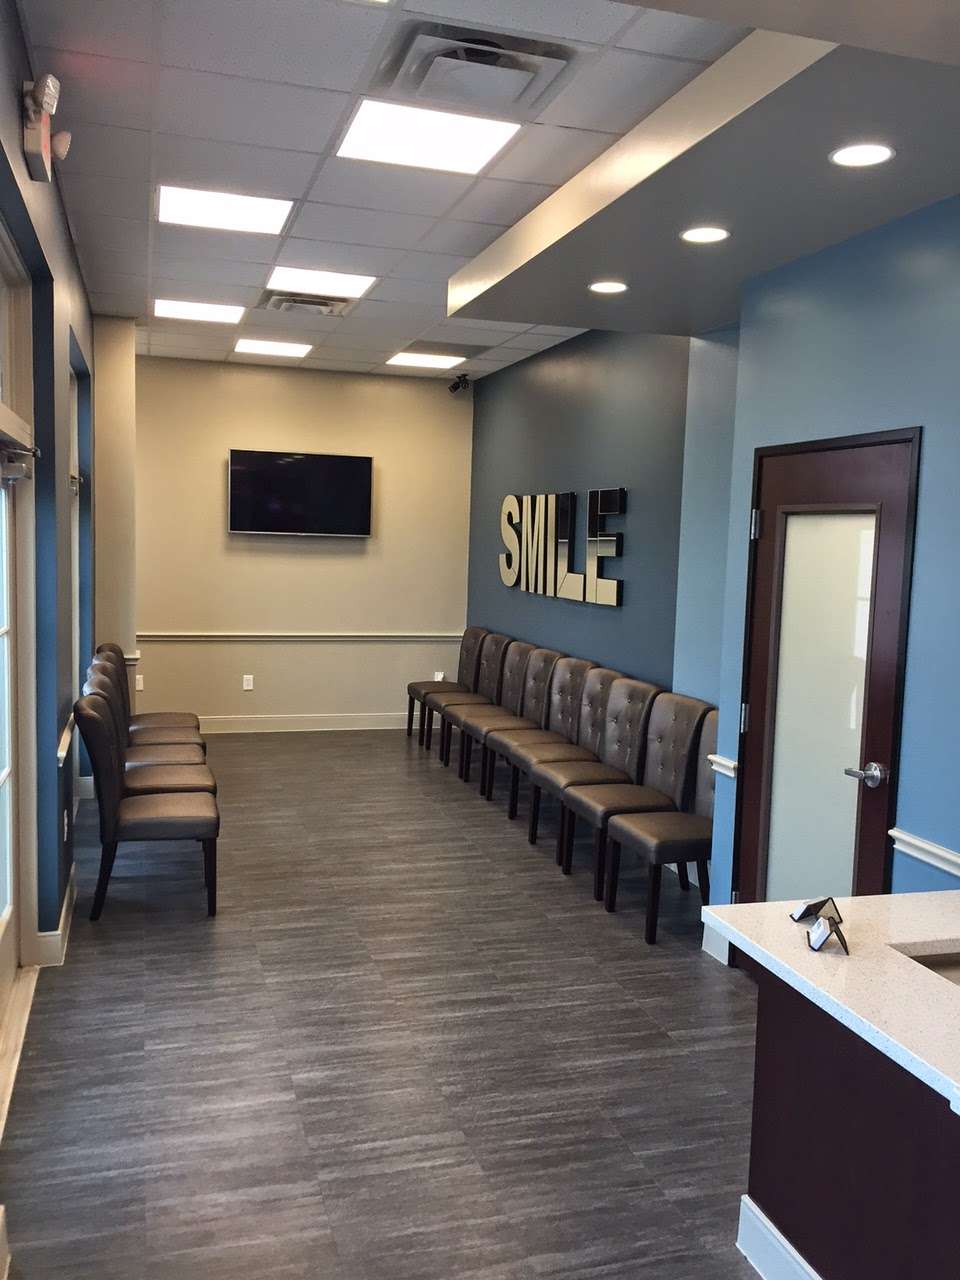 Gulfside Dental & Orthodontics Galveston | 6026 Seawall Blvd b, Galveston, TX 77551 | Phone: (409) 539-3447